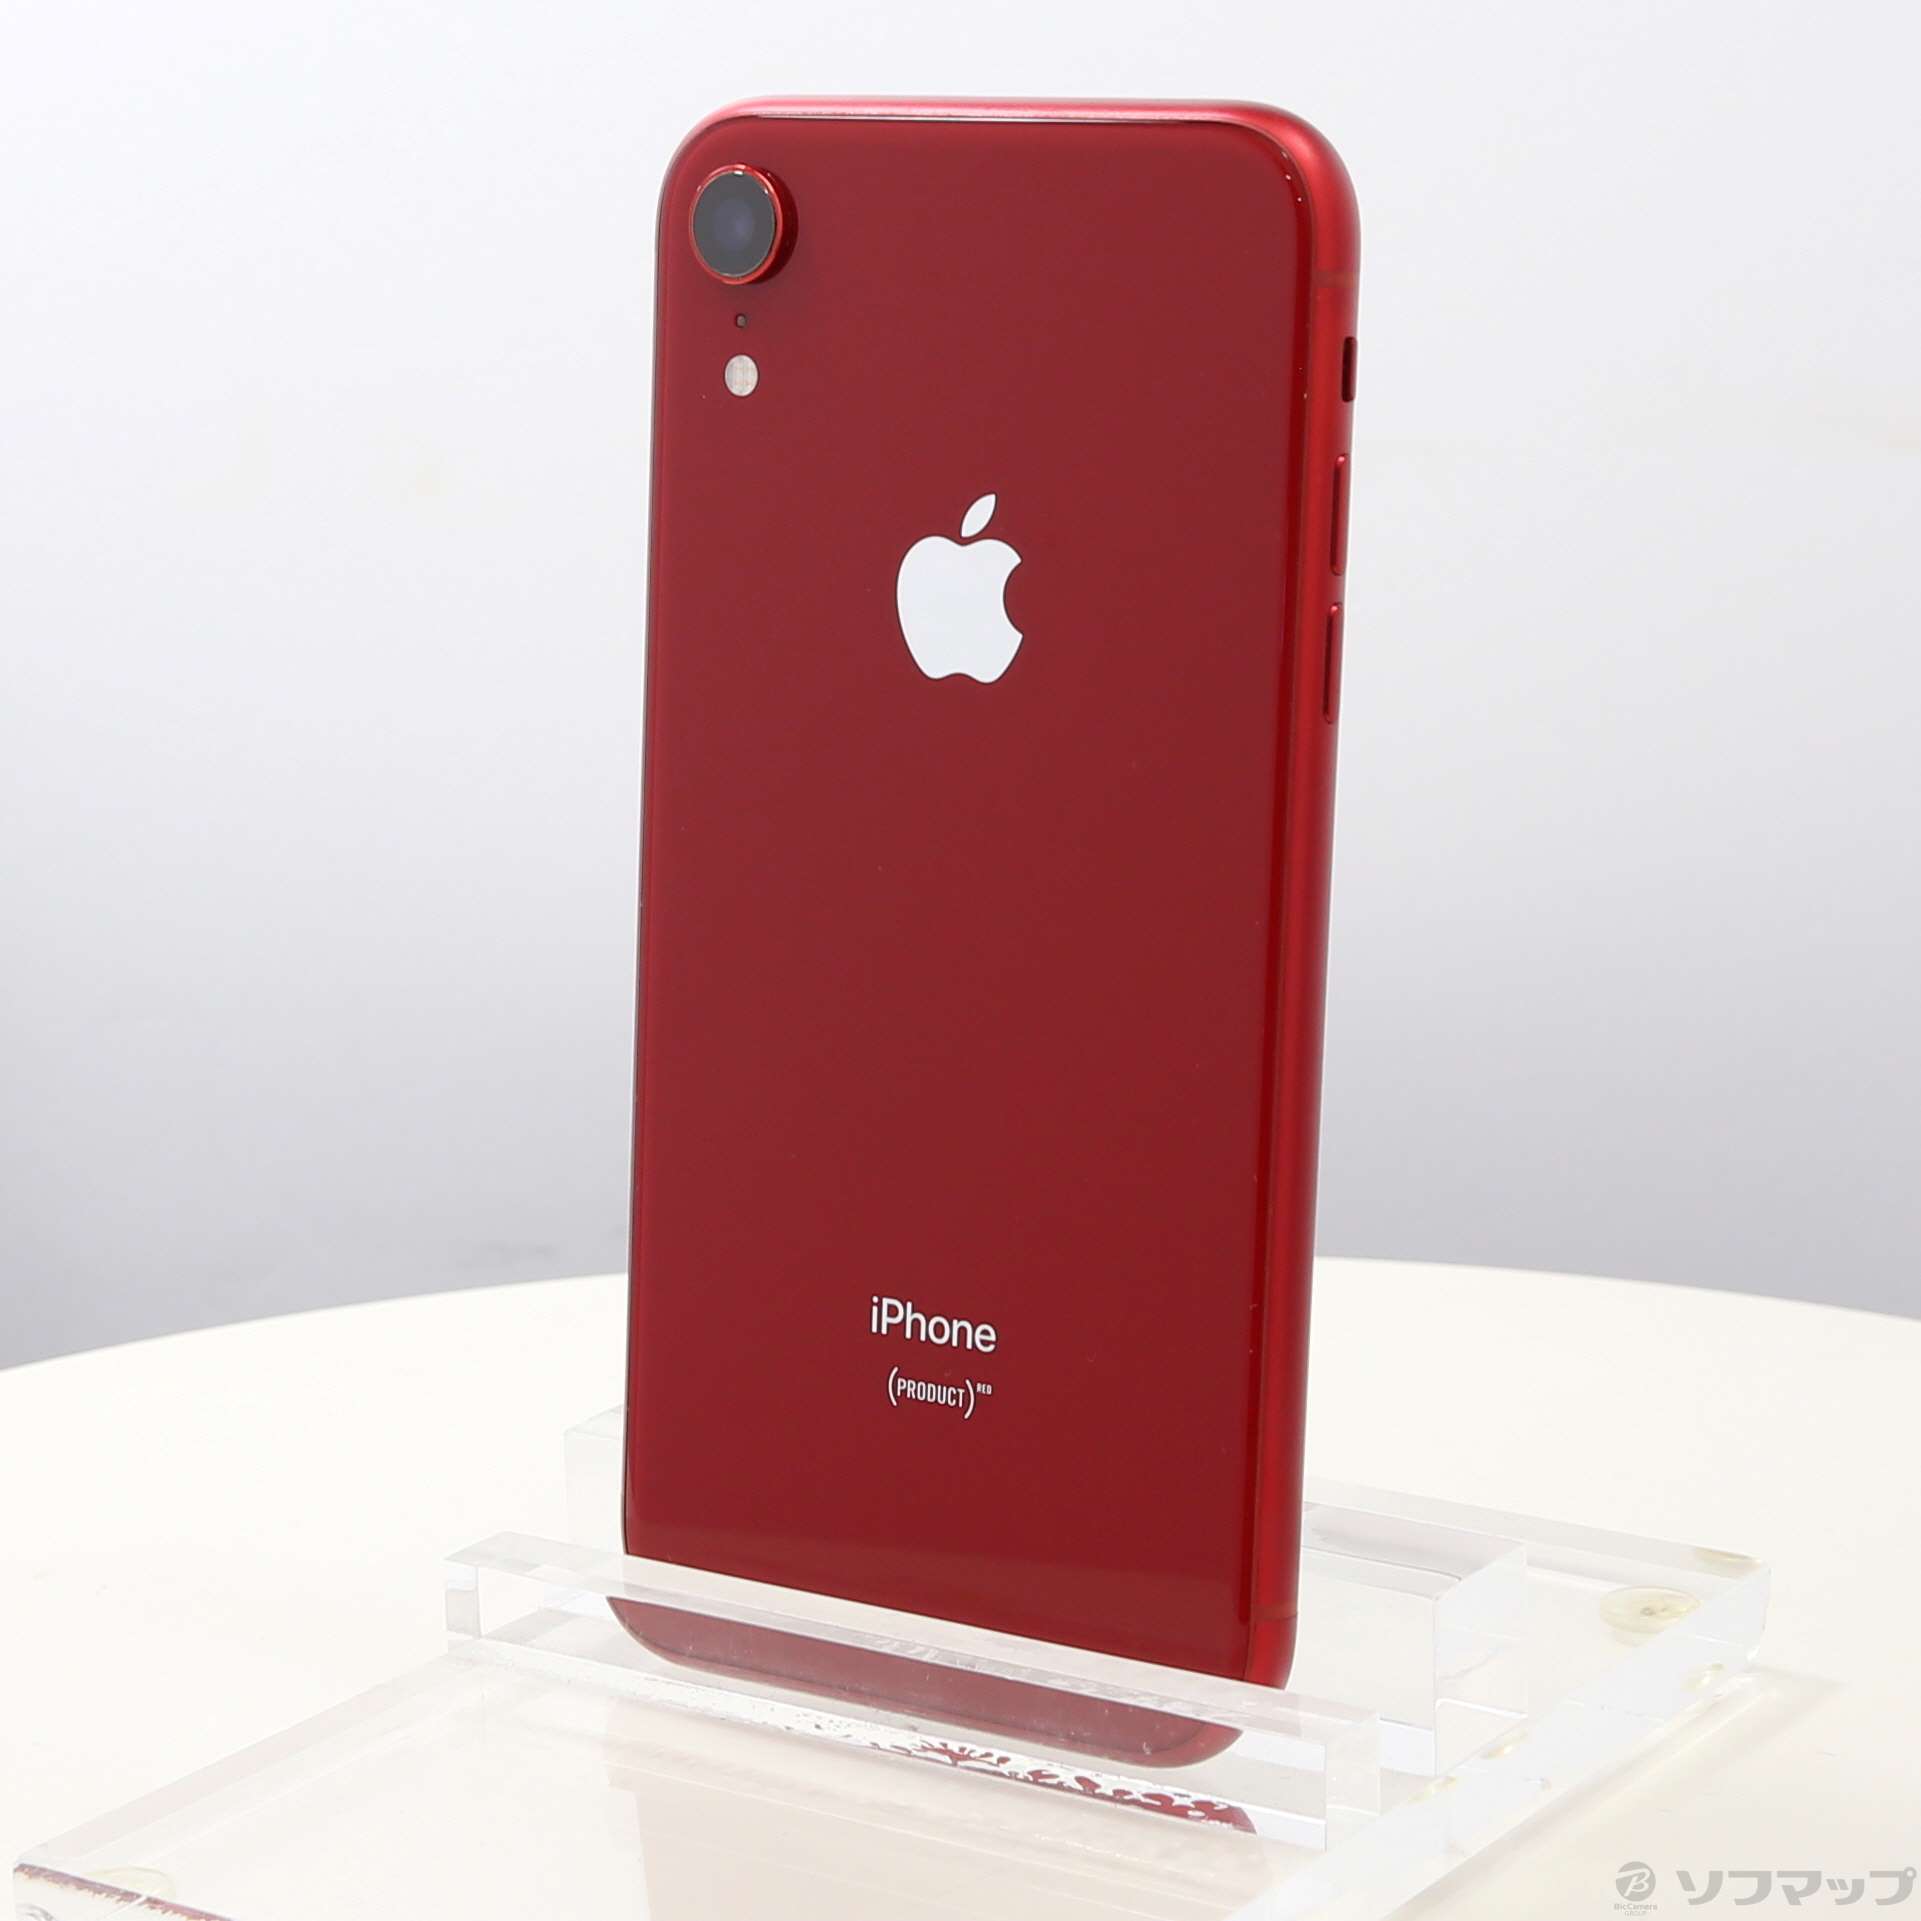 tamtam様 iPhoneXR 128GB PRODUCT RED - スマートフォン本体